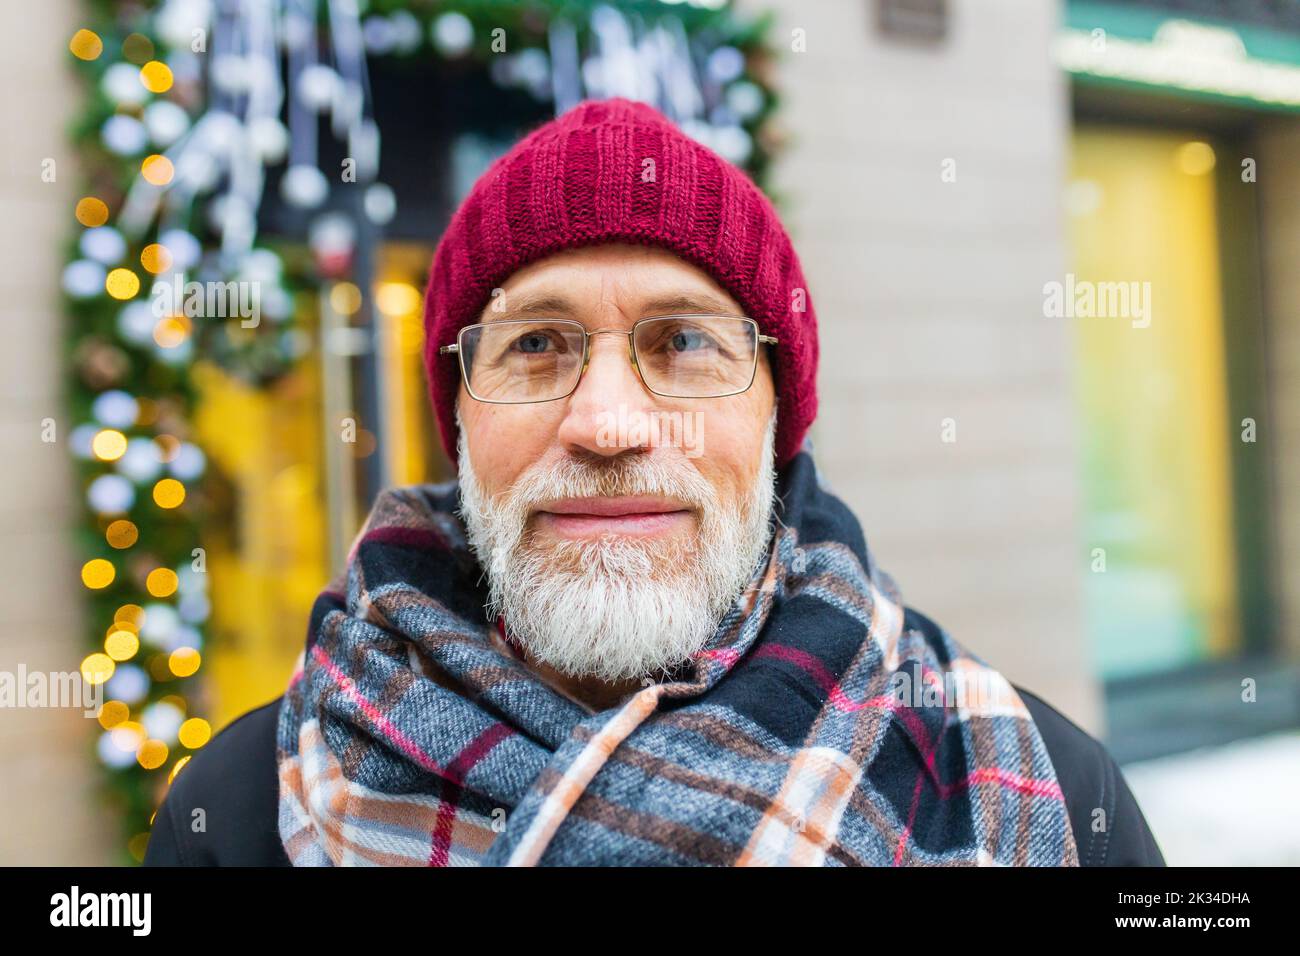 trendy old good-looking man walking in sity street at winter near modern building Stock Photo